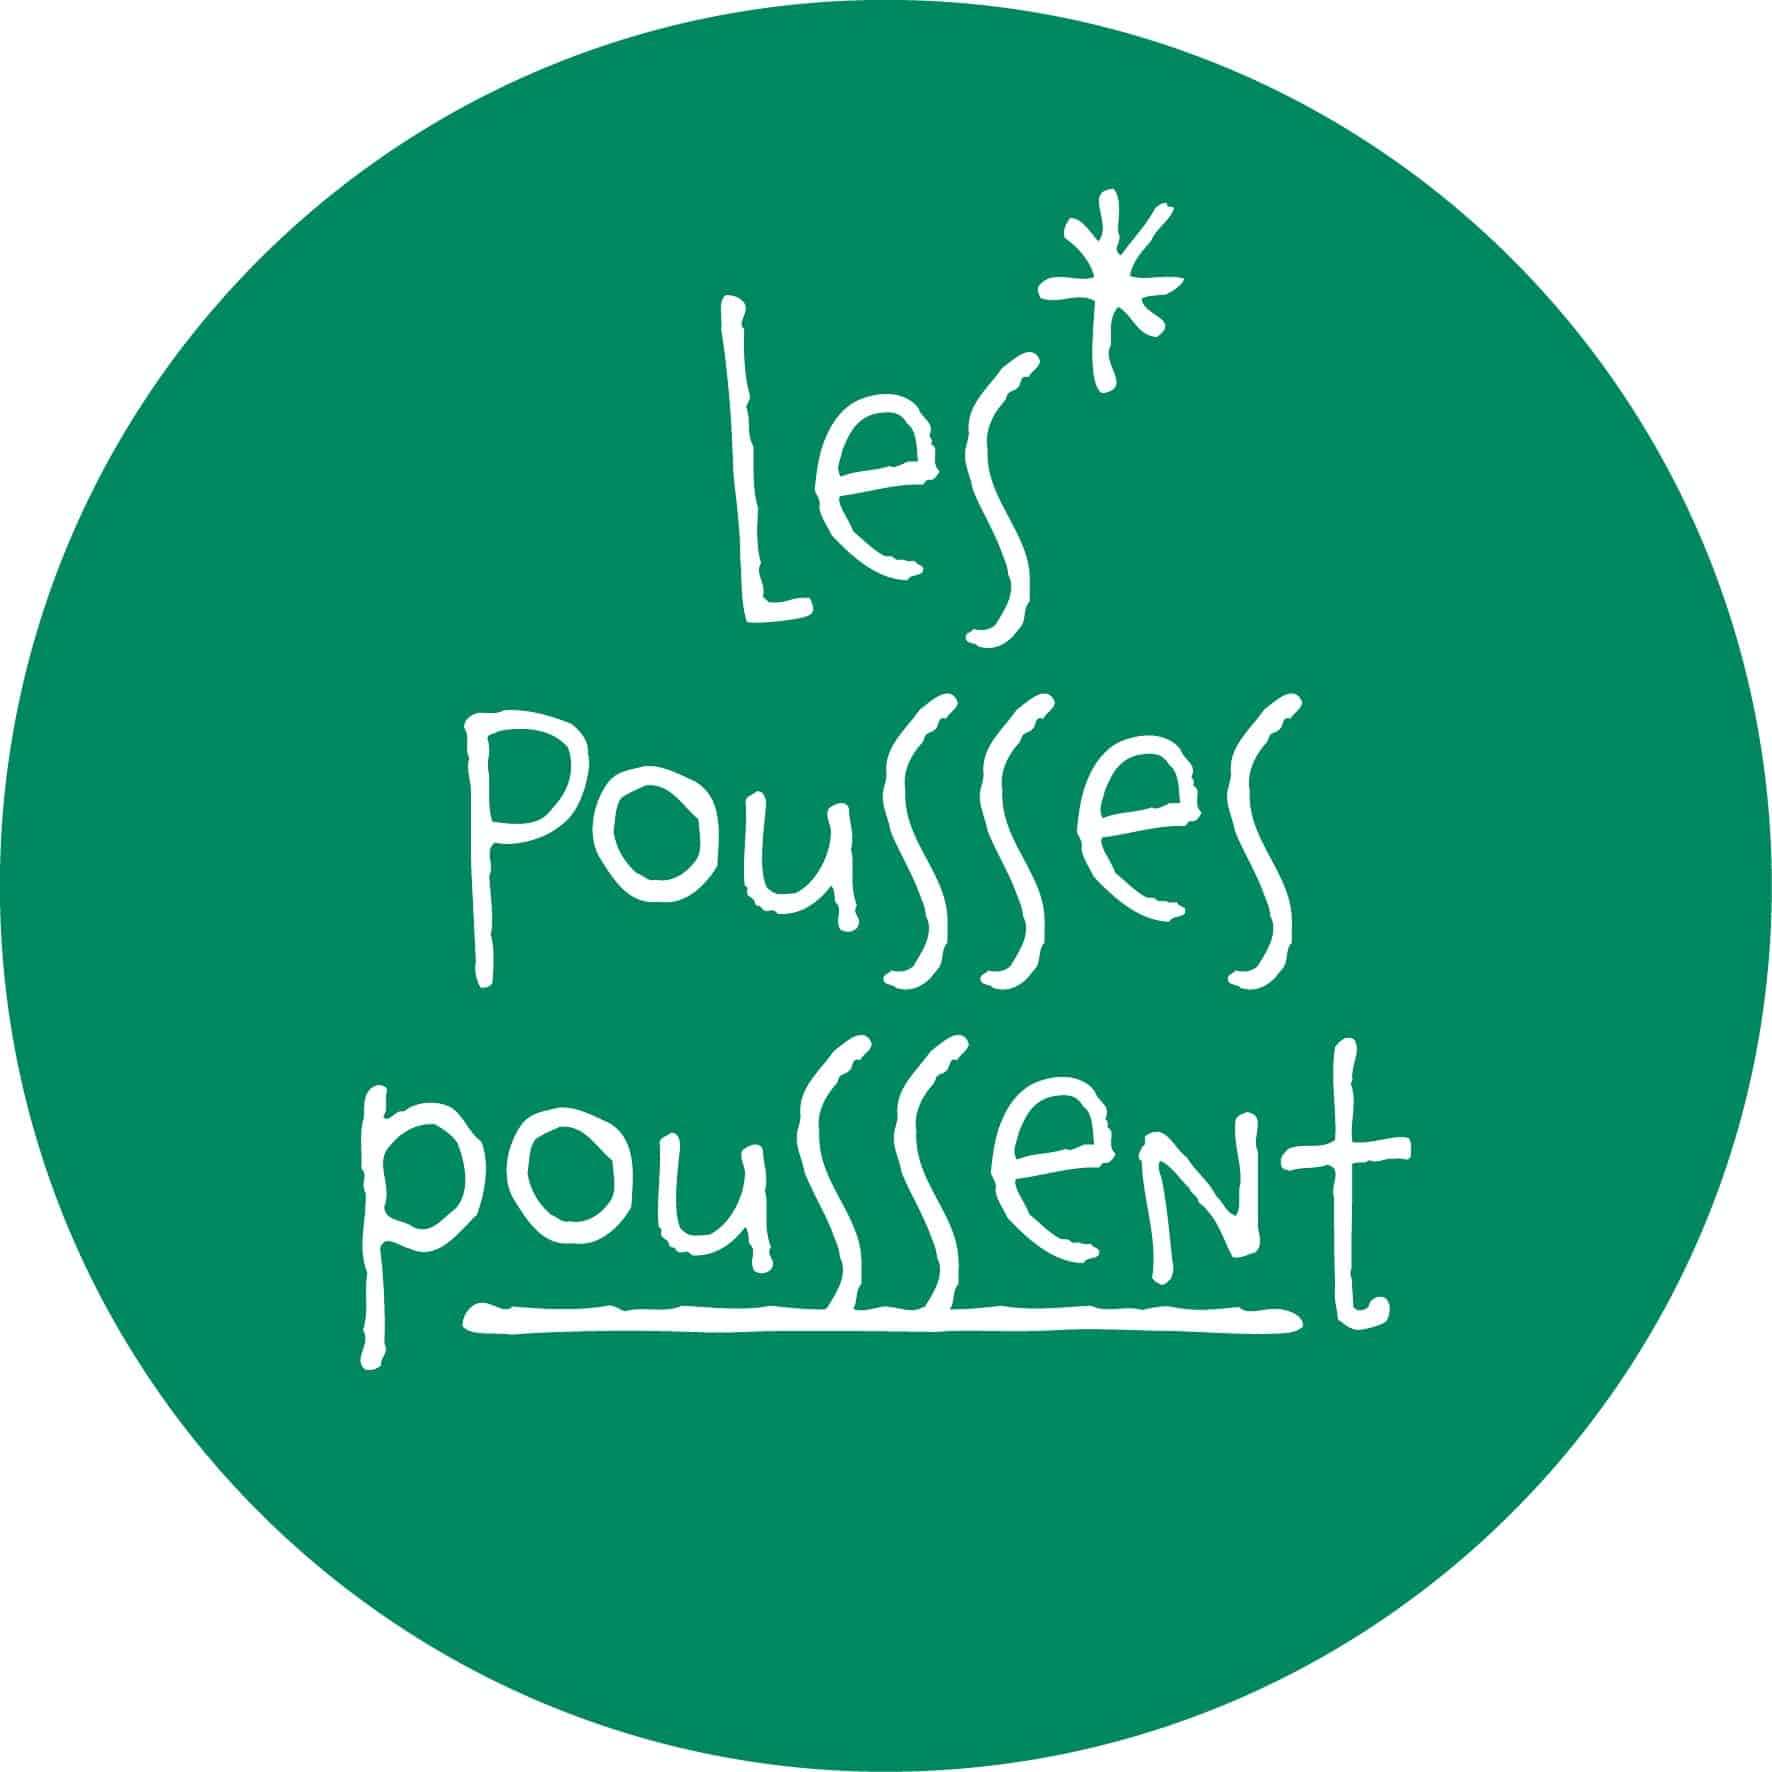 Les-Pousses-poussent_Rond_Vert_Synthese.jpg